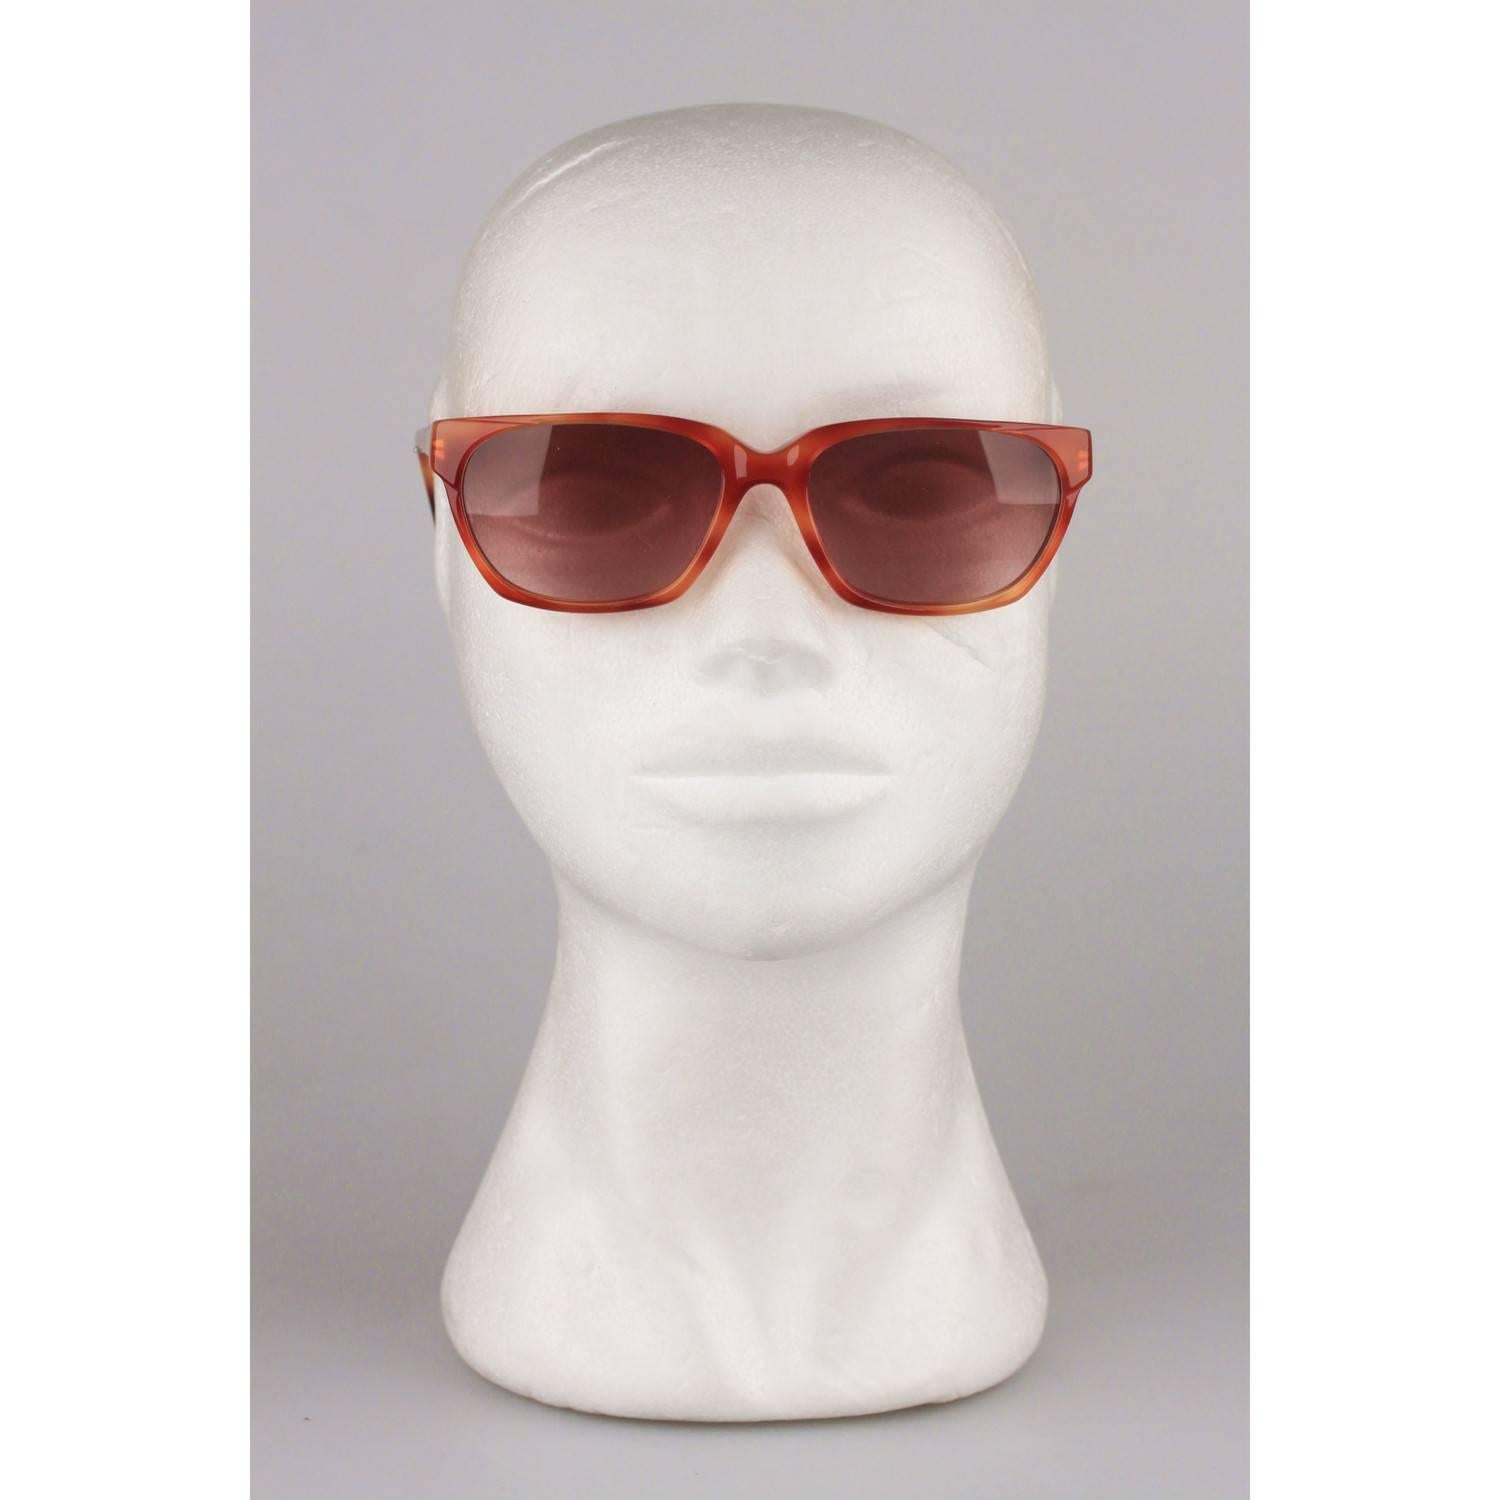 YVES SAINT LAURENT Vintage Sunglasses Phocos 56-16mm New Old Stock 2